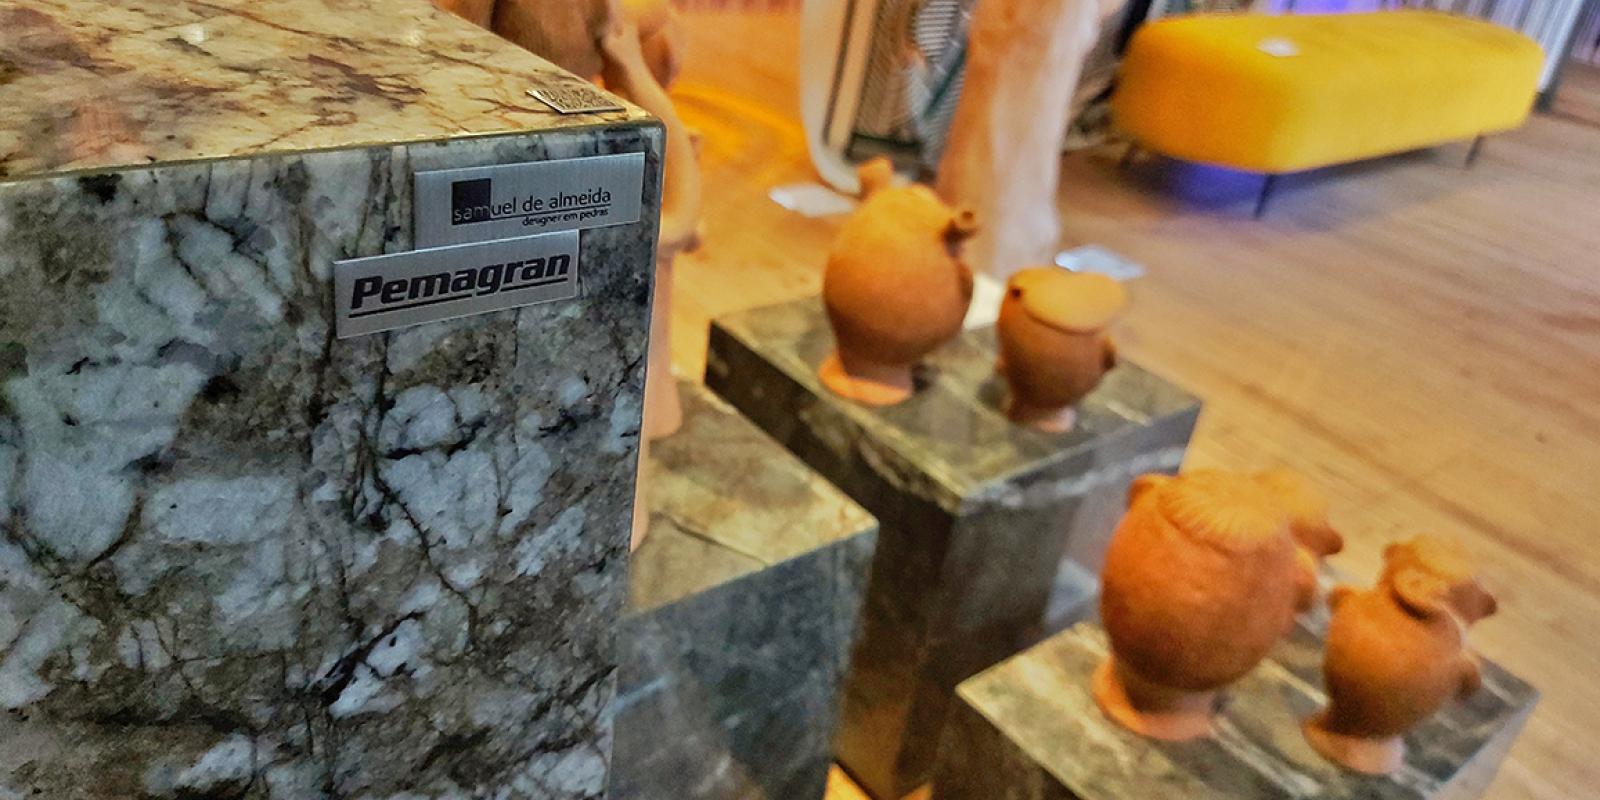 Brazilian stone goes on show in London